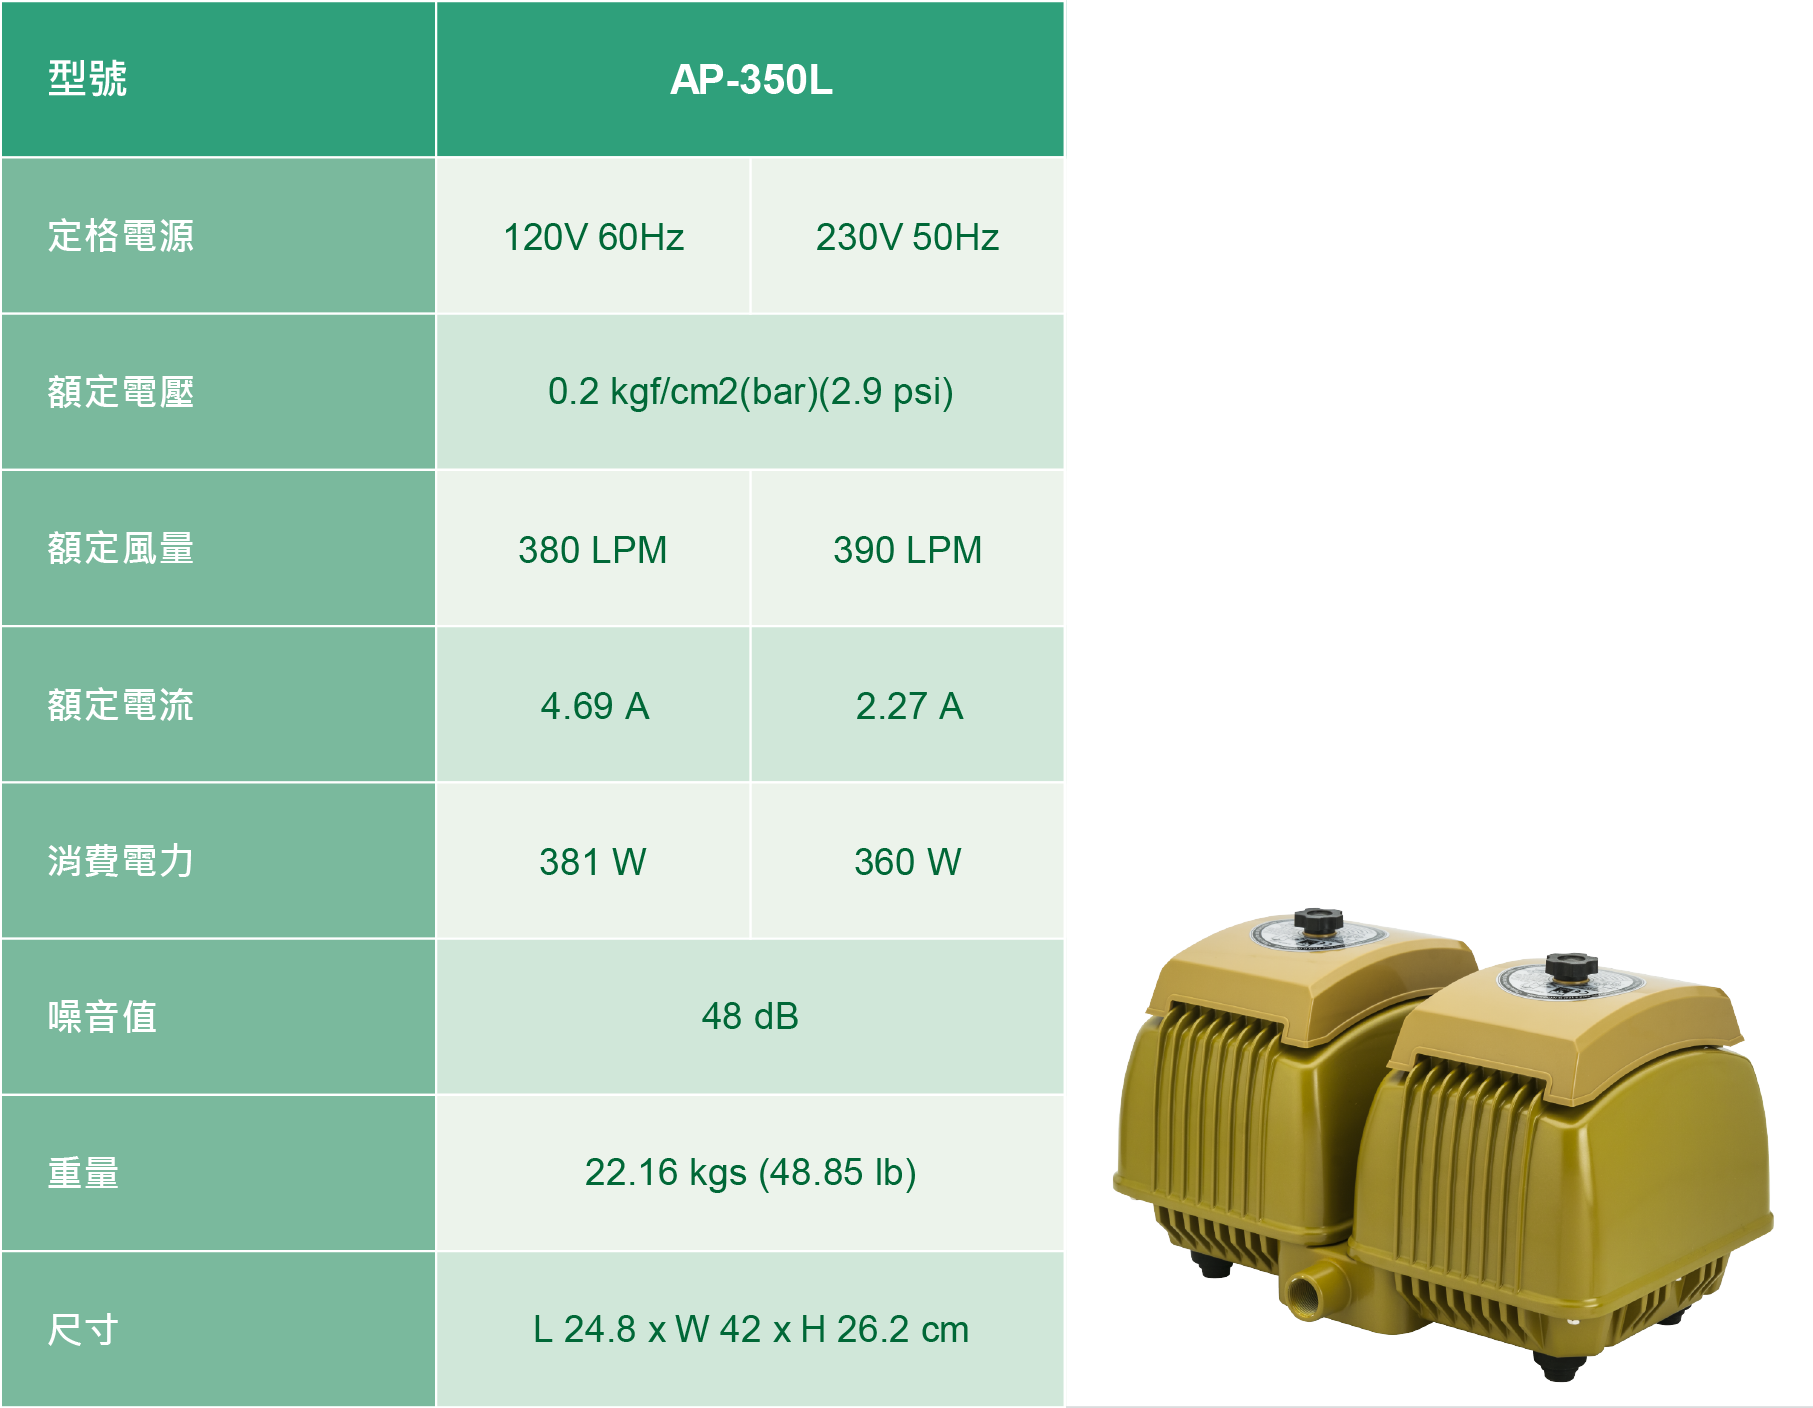 Linear Air Pumps AP-350L Performance